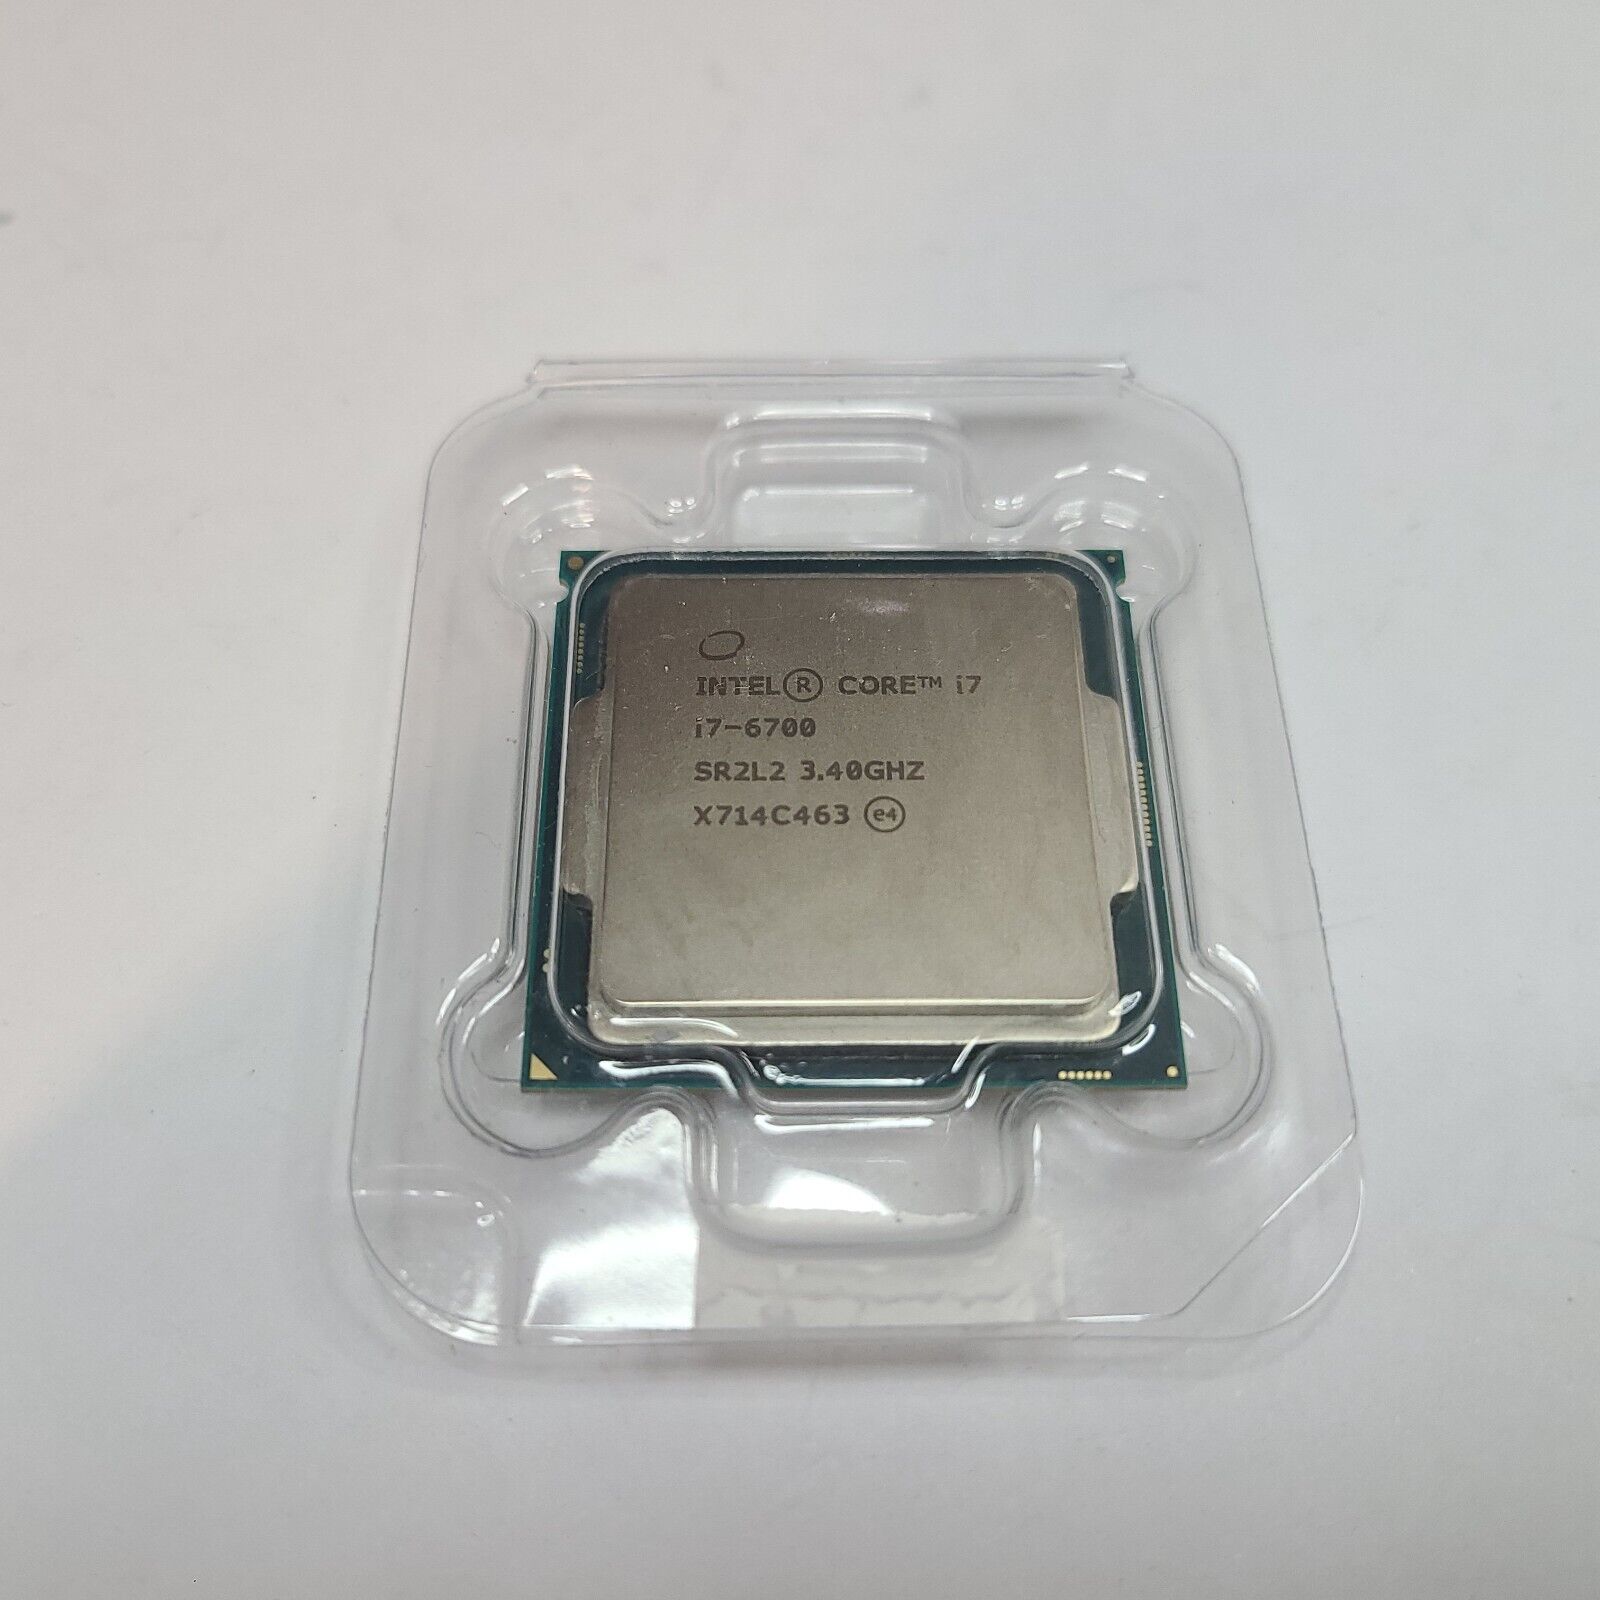 Intel Core i7-6700 3.40GHz 4-Core 8MB CPU Processor | LGA 1151 | SR2L2 | Tested